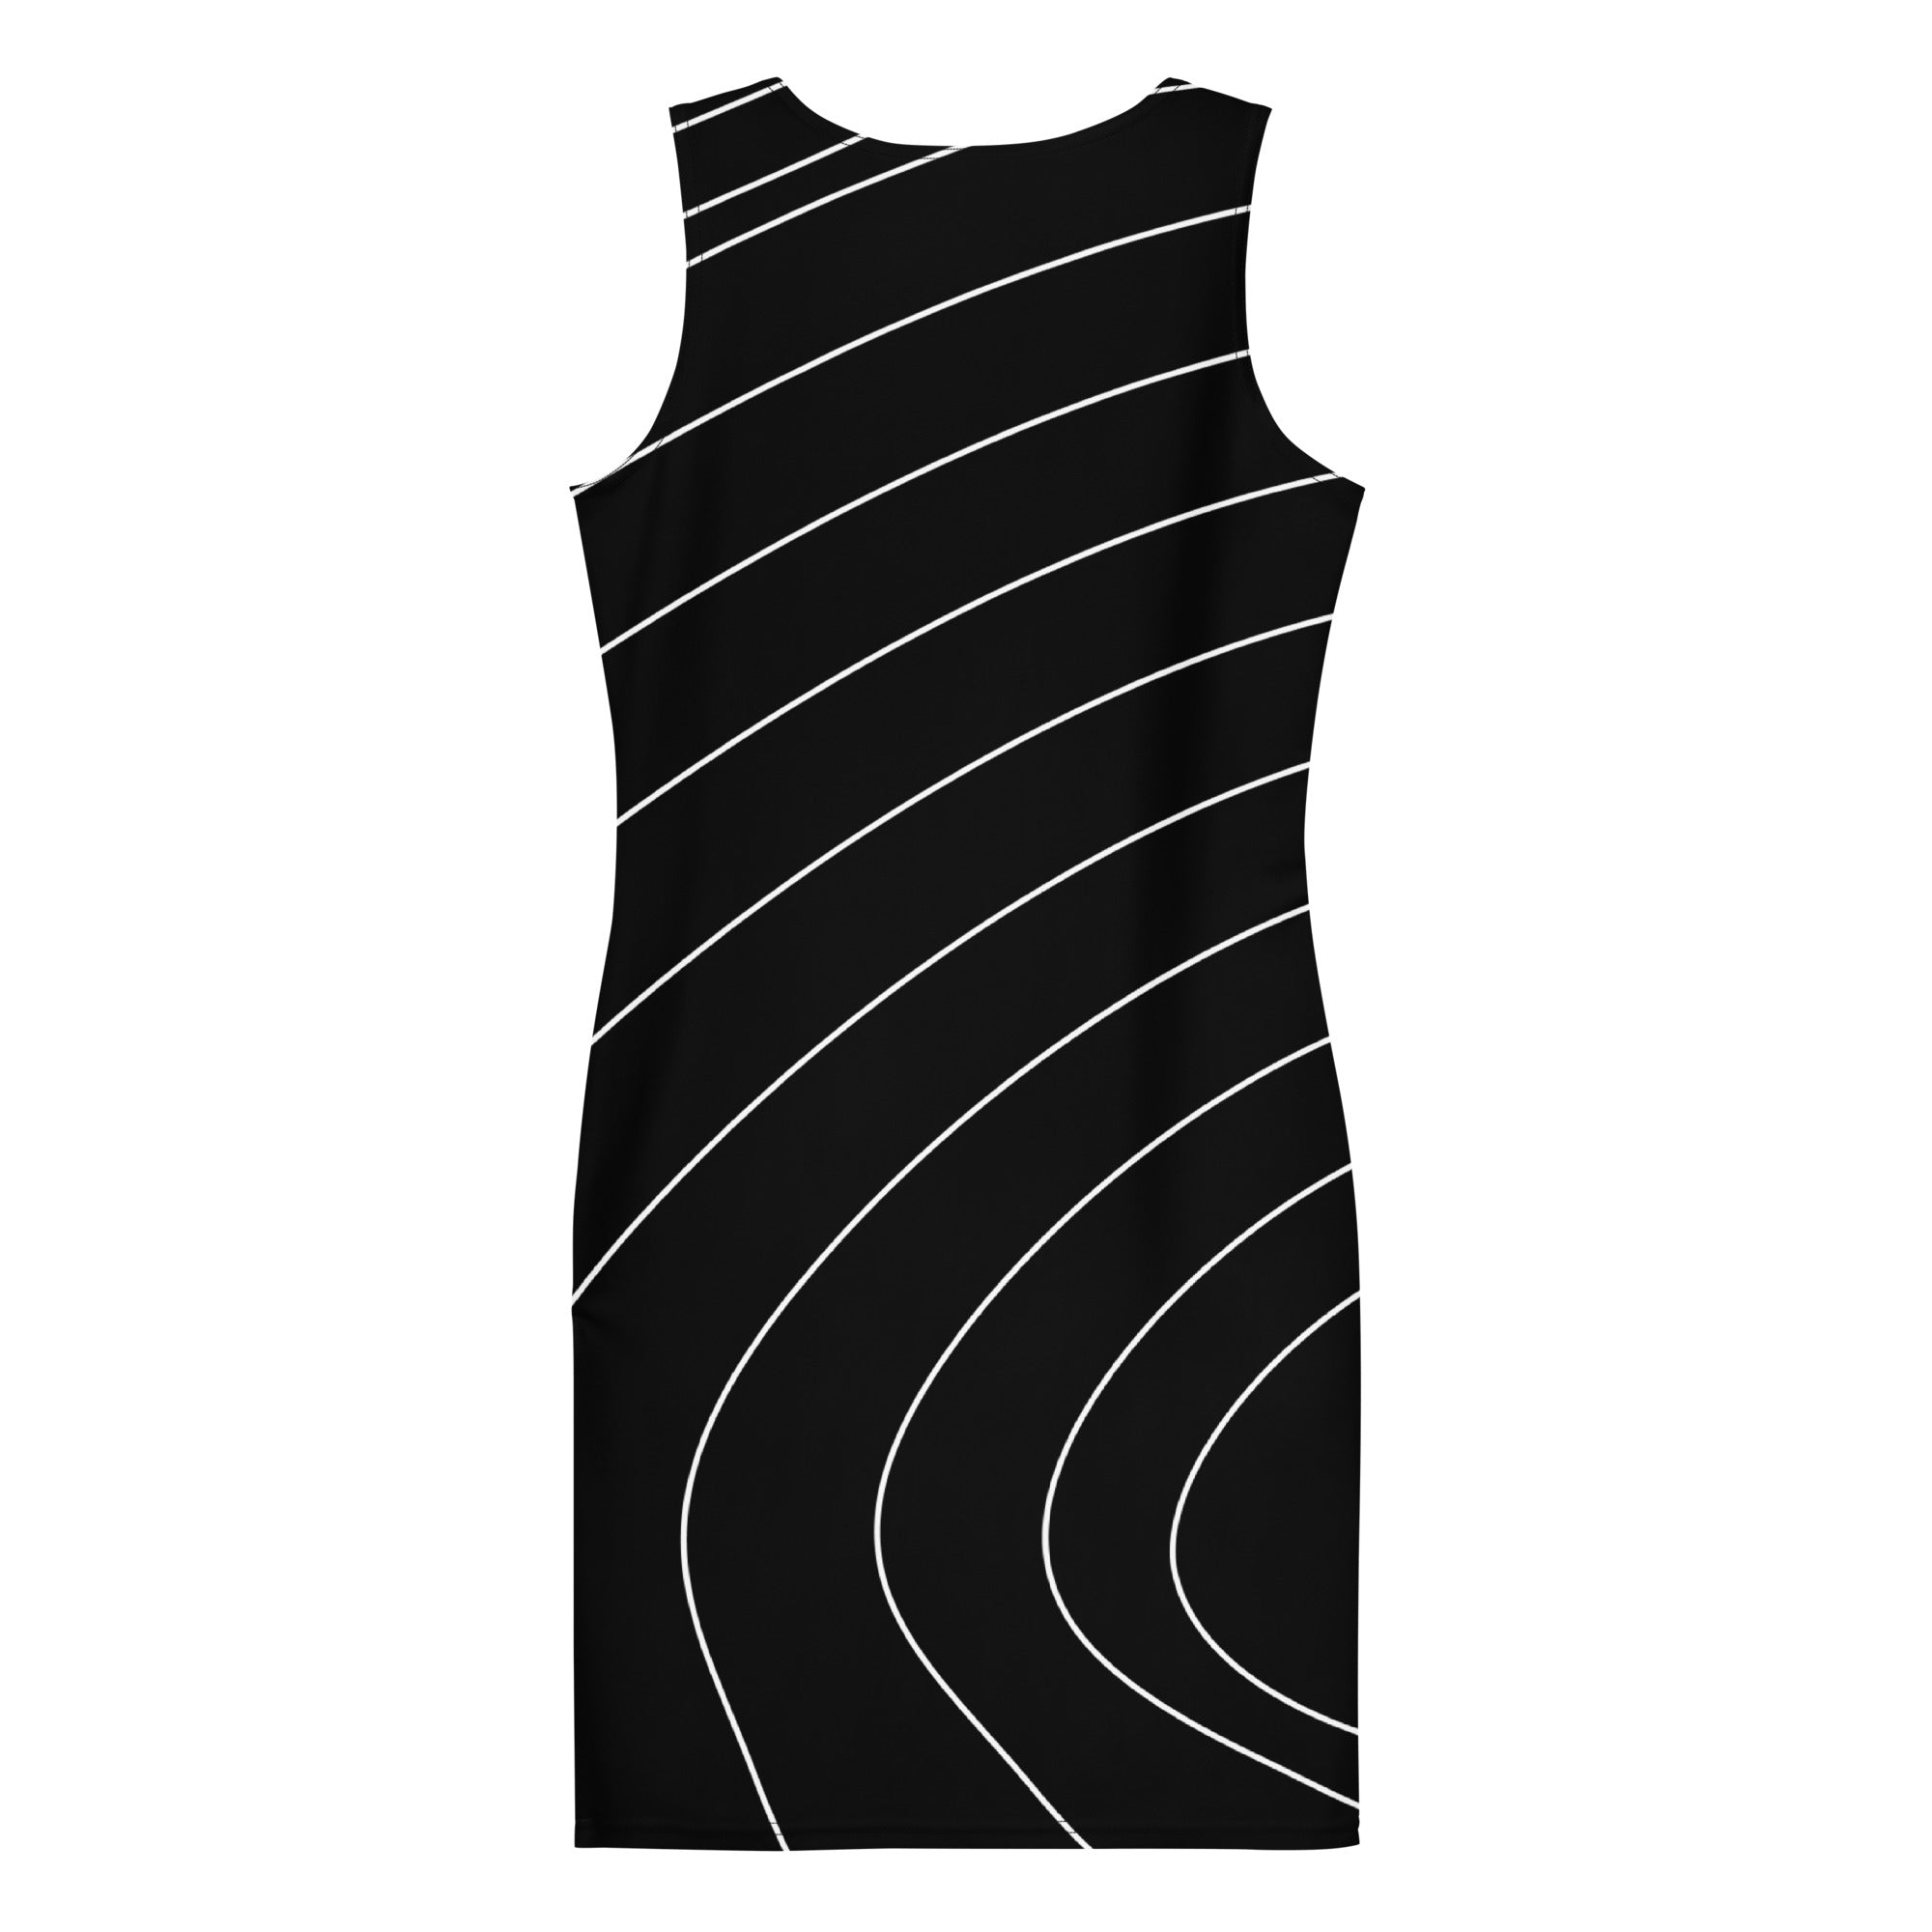 C21 Seal Swirl Sublimation Cut & Sew Dress